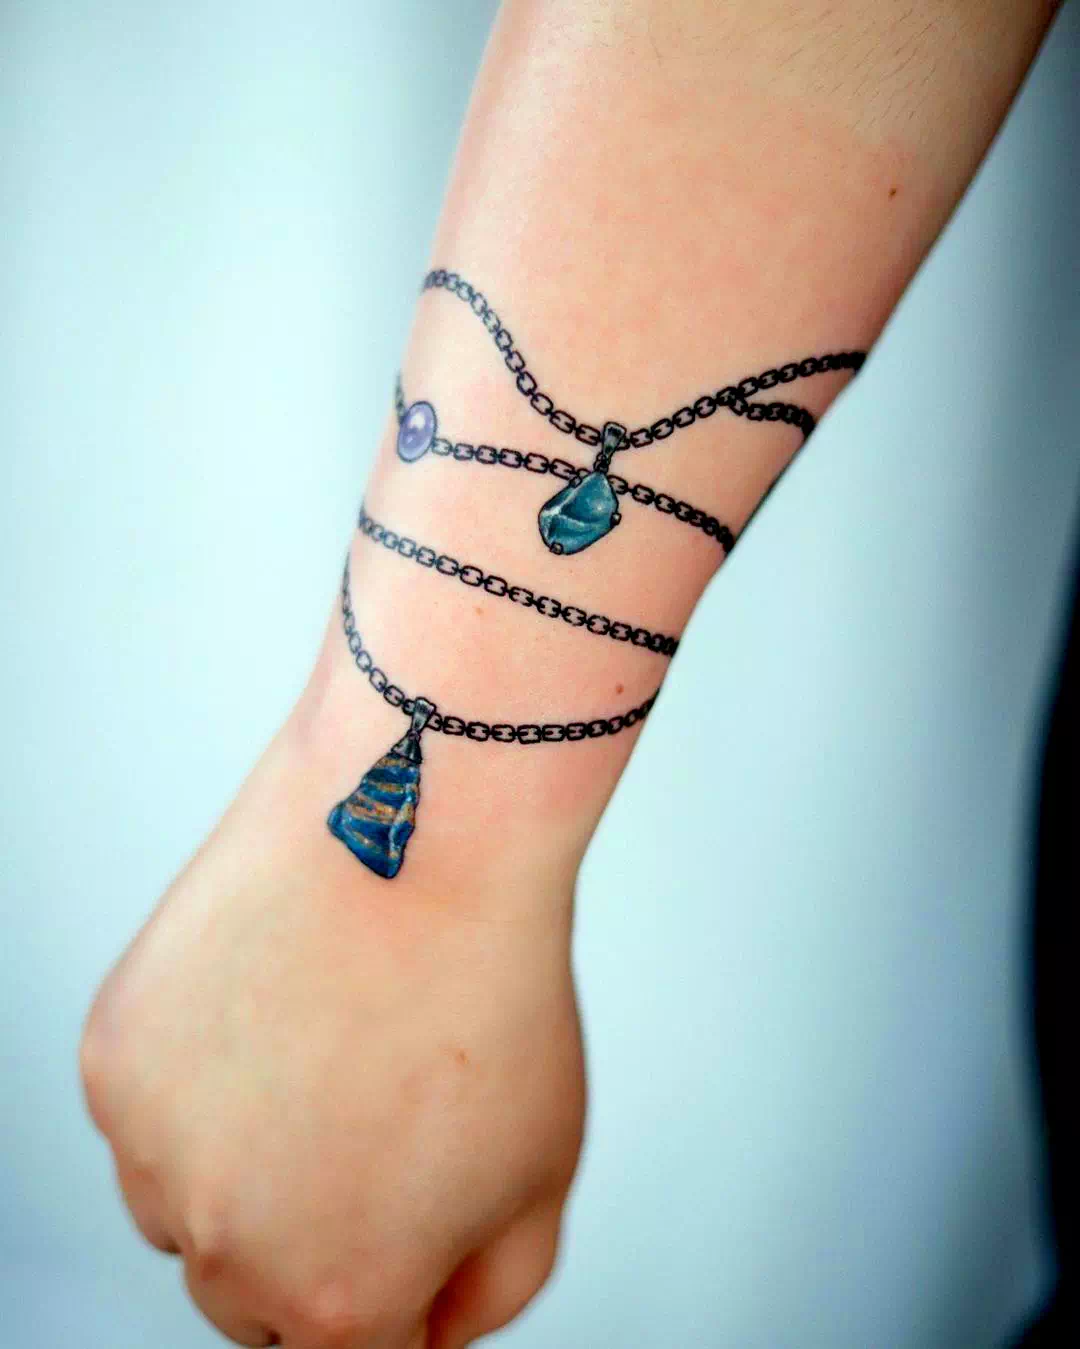 Delicate Bracelet Tattoo Recreation